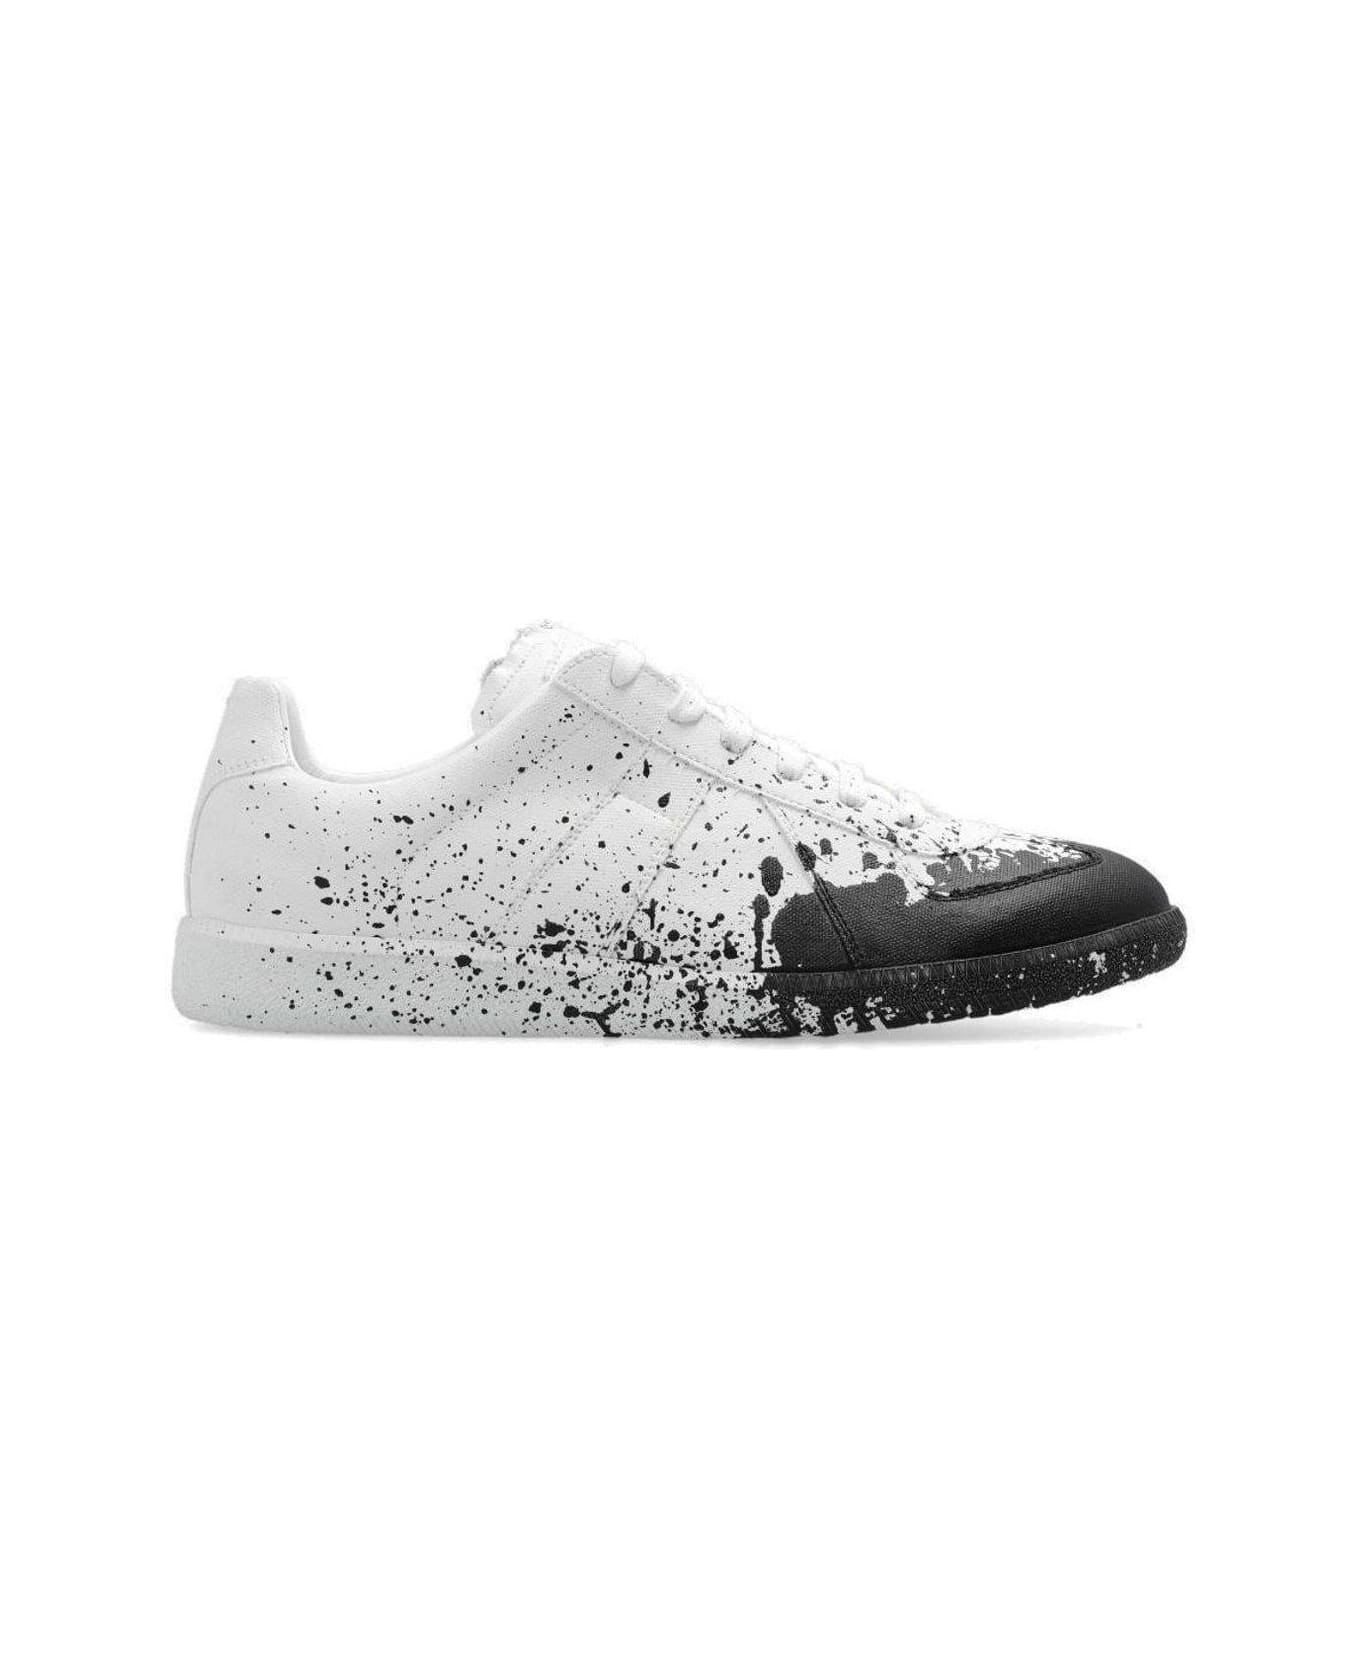 Maison Margiela Painter Replica Sneakers - White